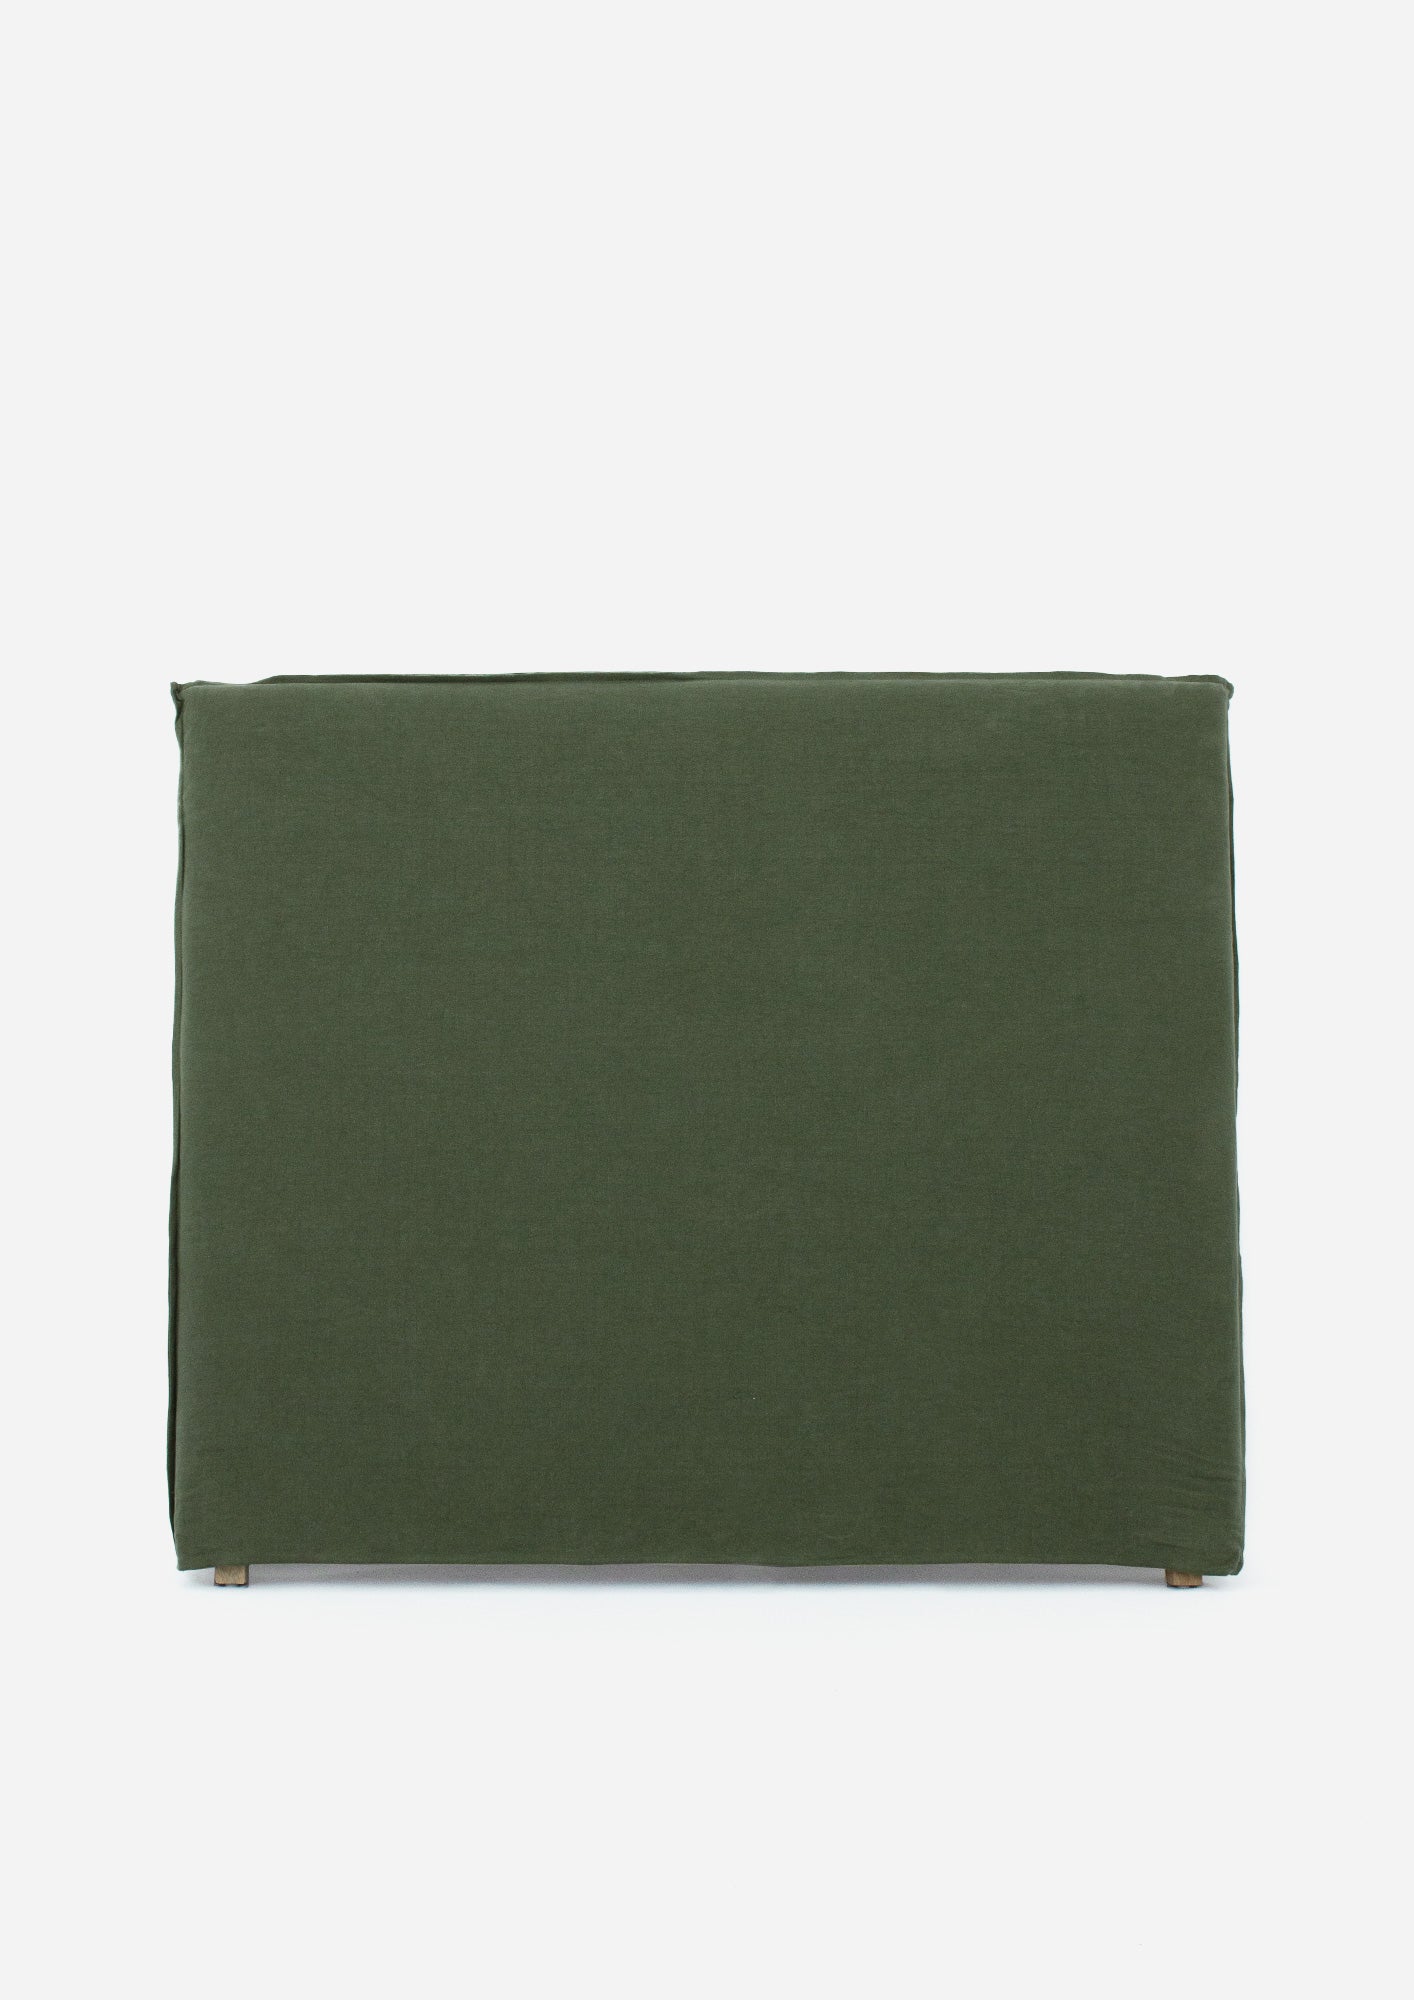 Whitby Moss Green Slipcover Headboard